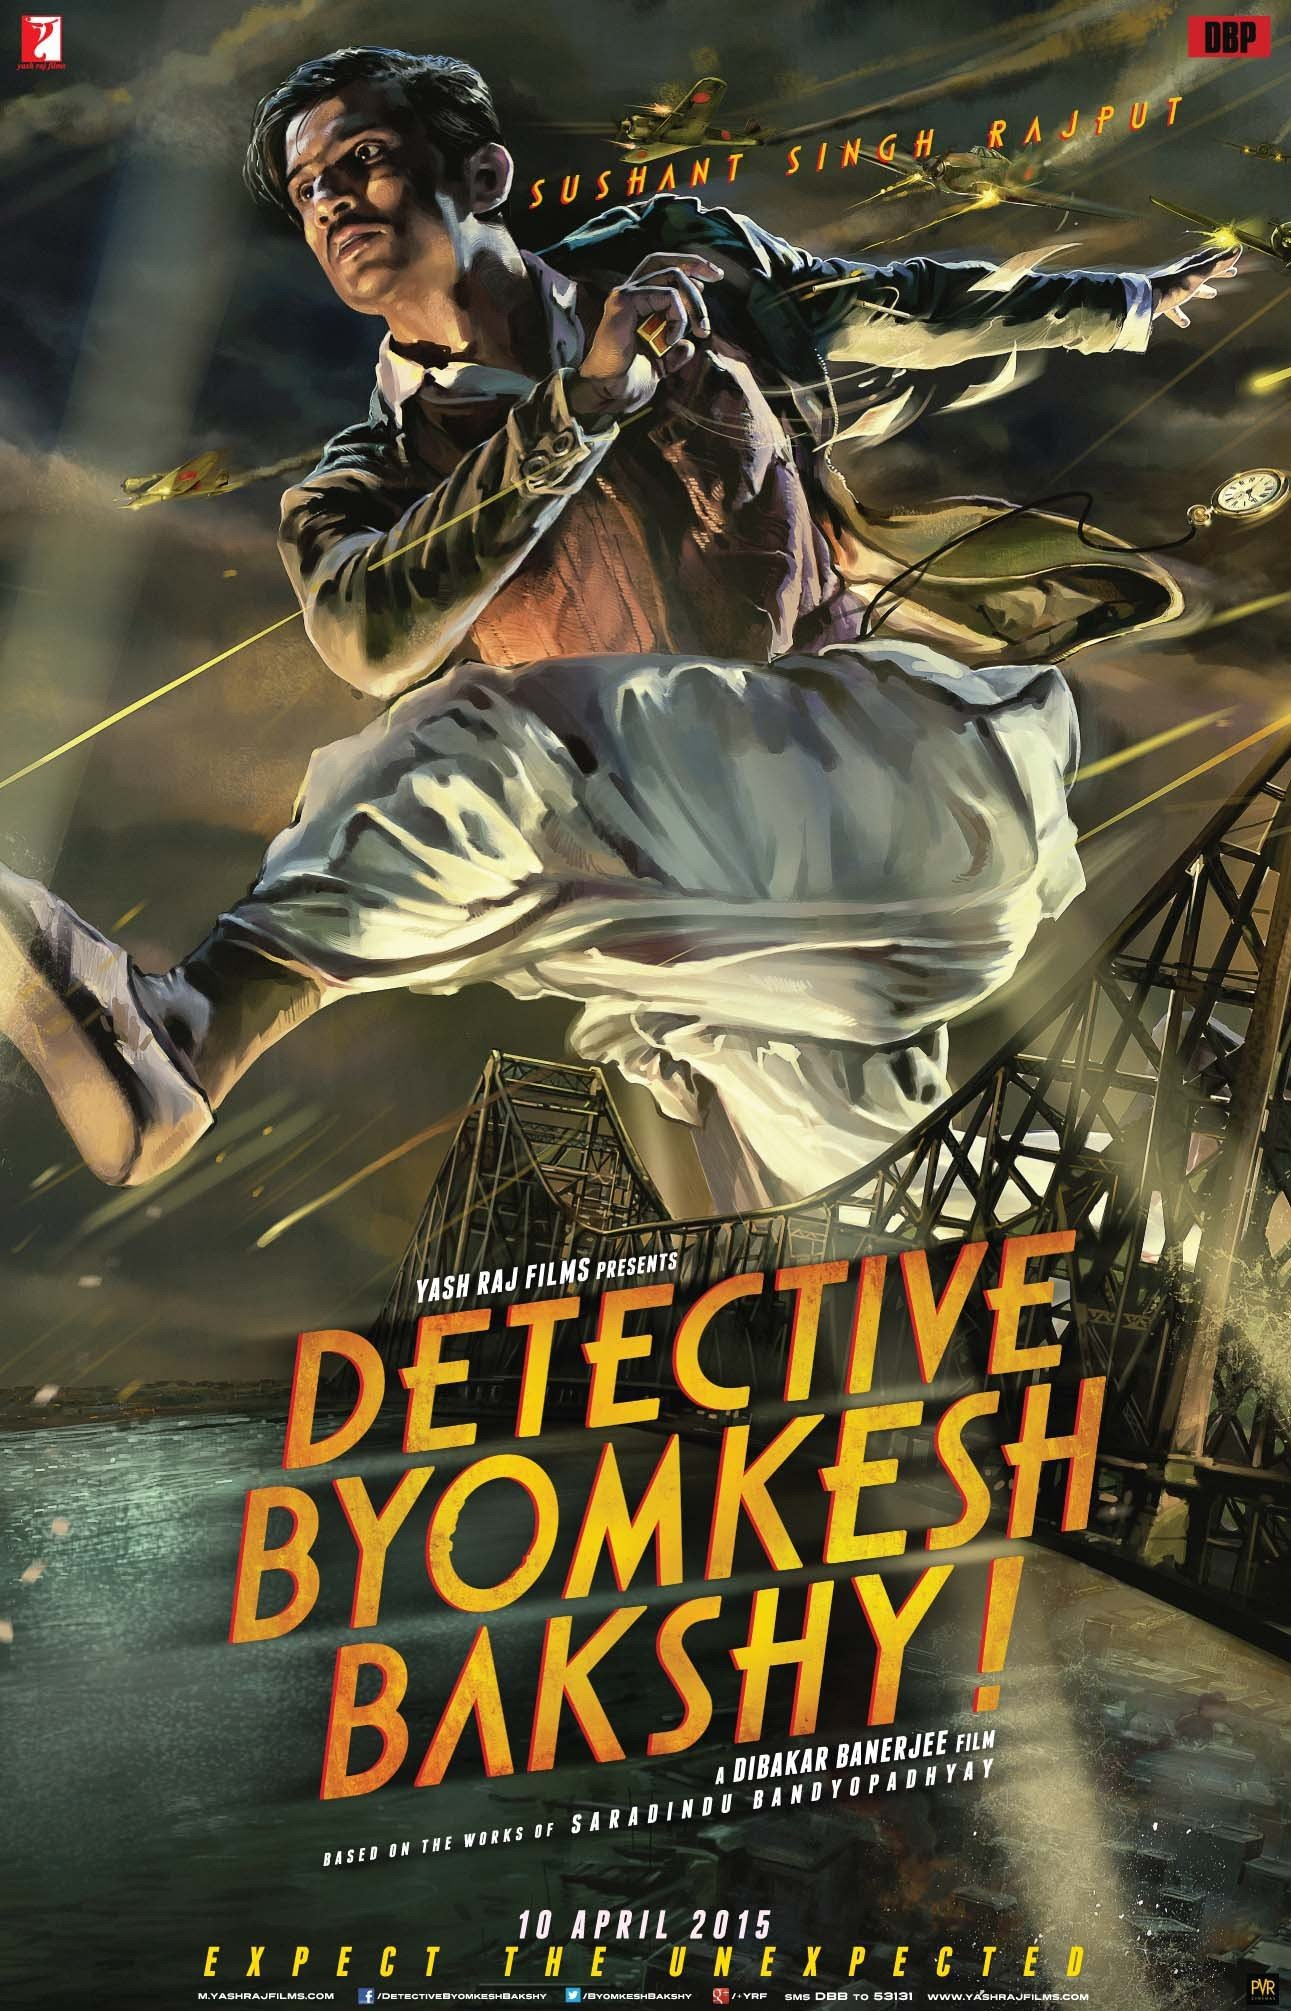 Detective Byomkesh Bakshy! - Best Murder Mystery Movies